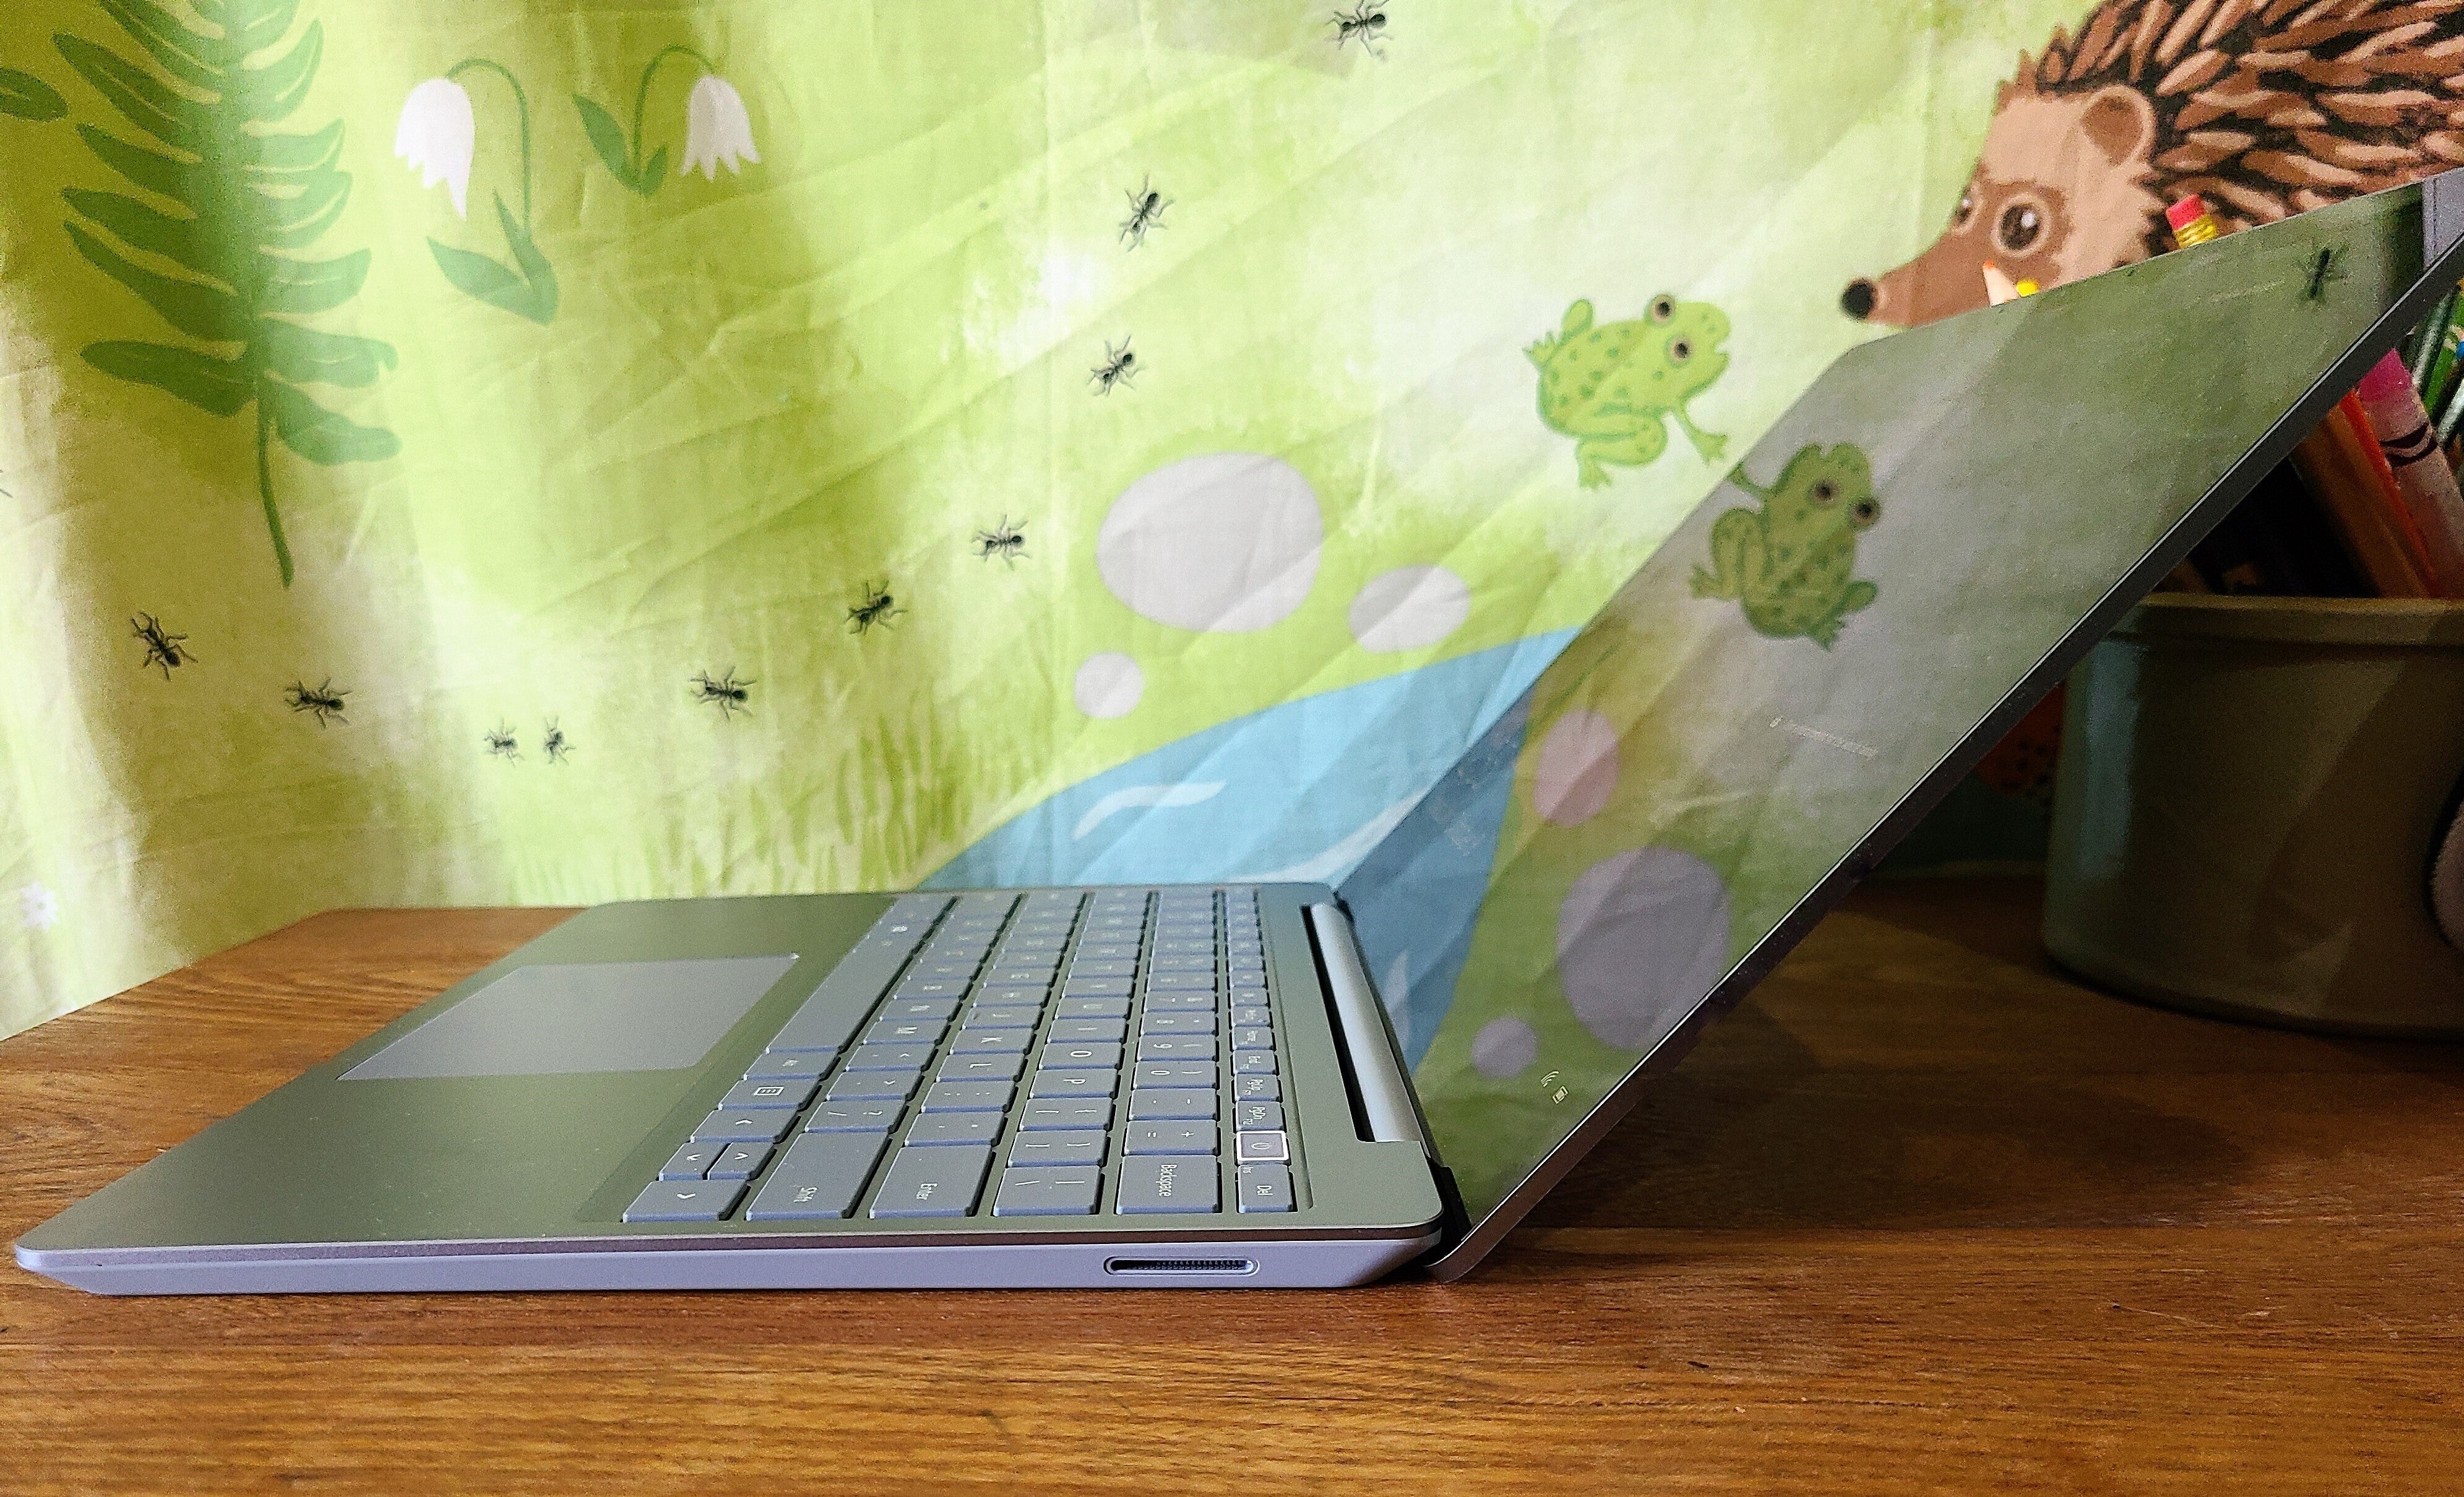 surface laptop go ram upgrade